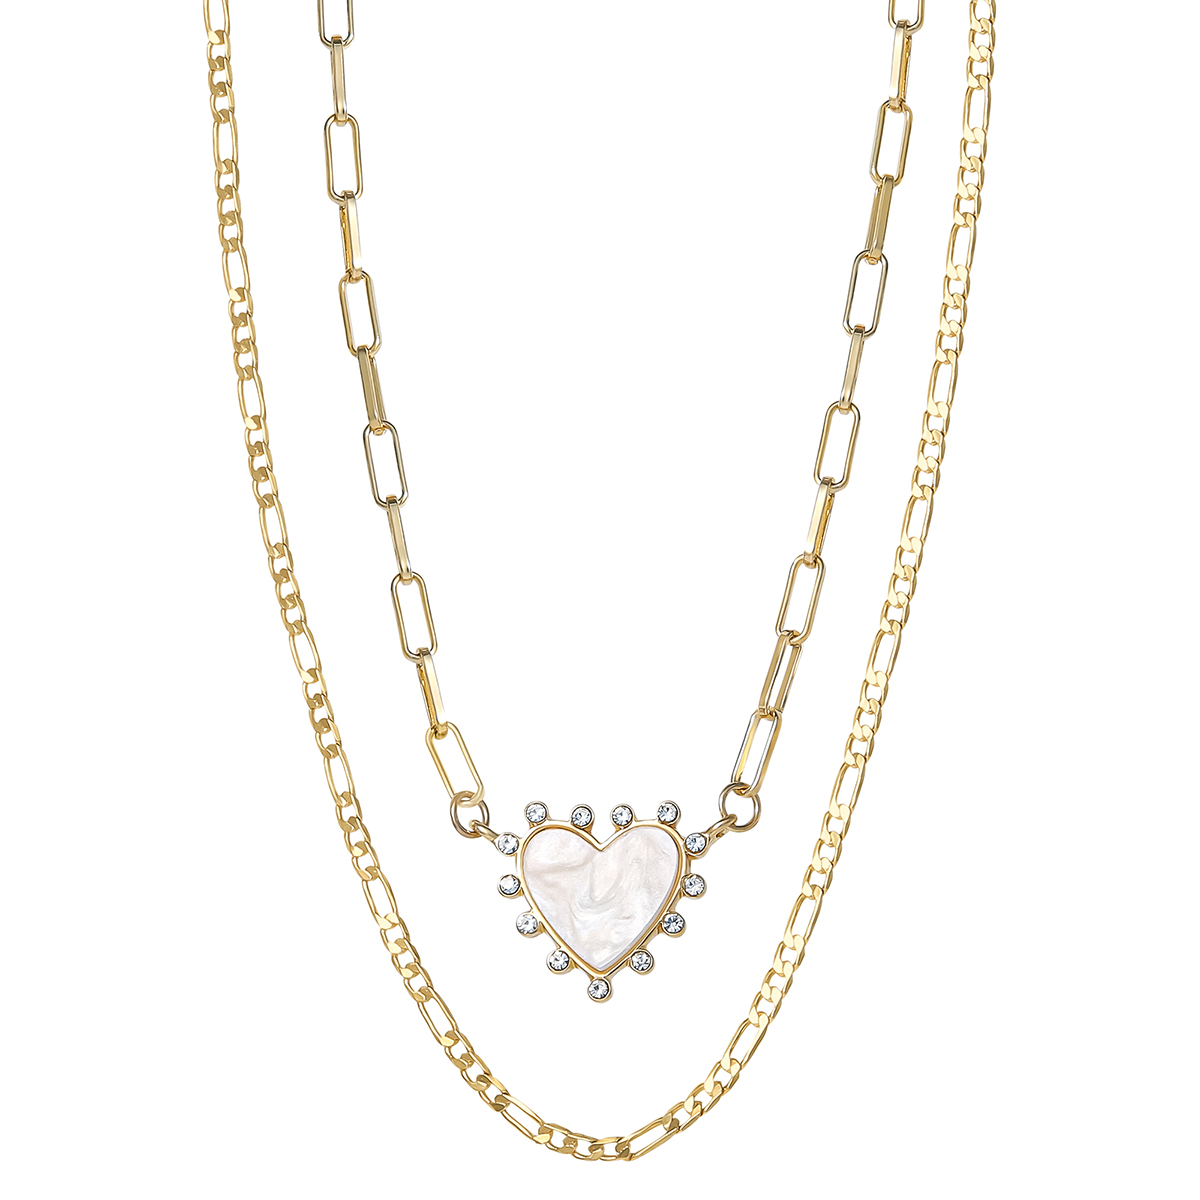 Jessica Simpson Layered White Stone Heart Necklace Set